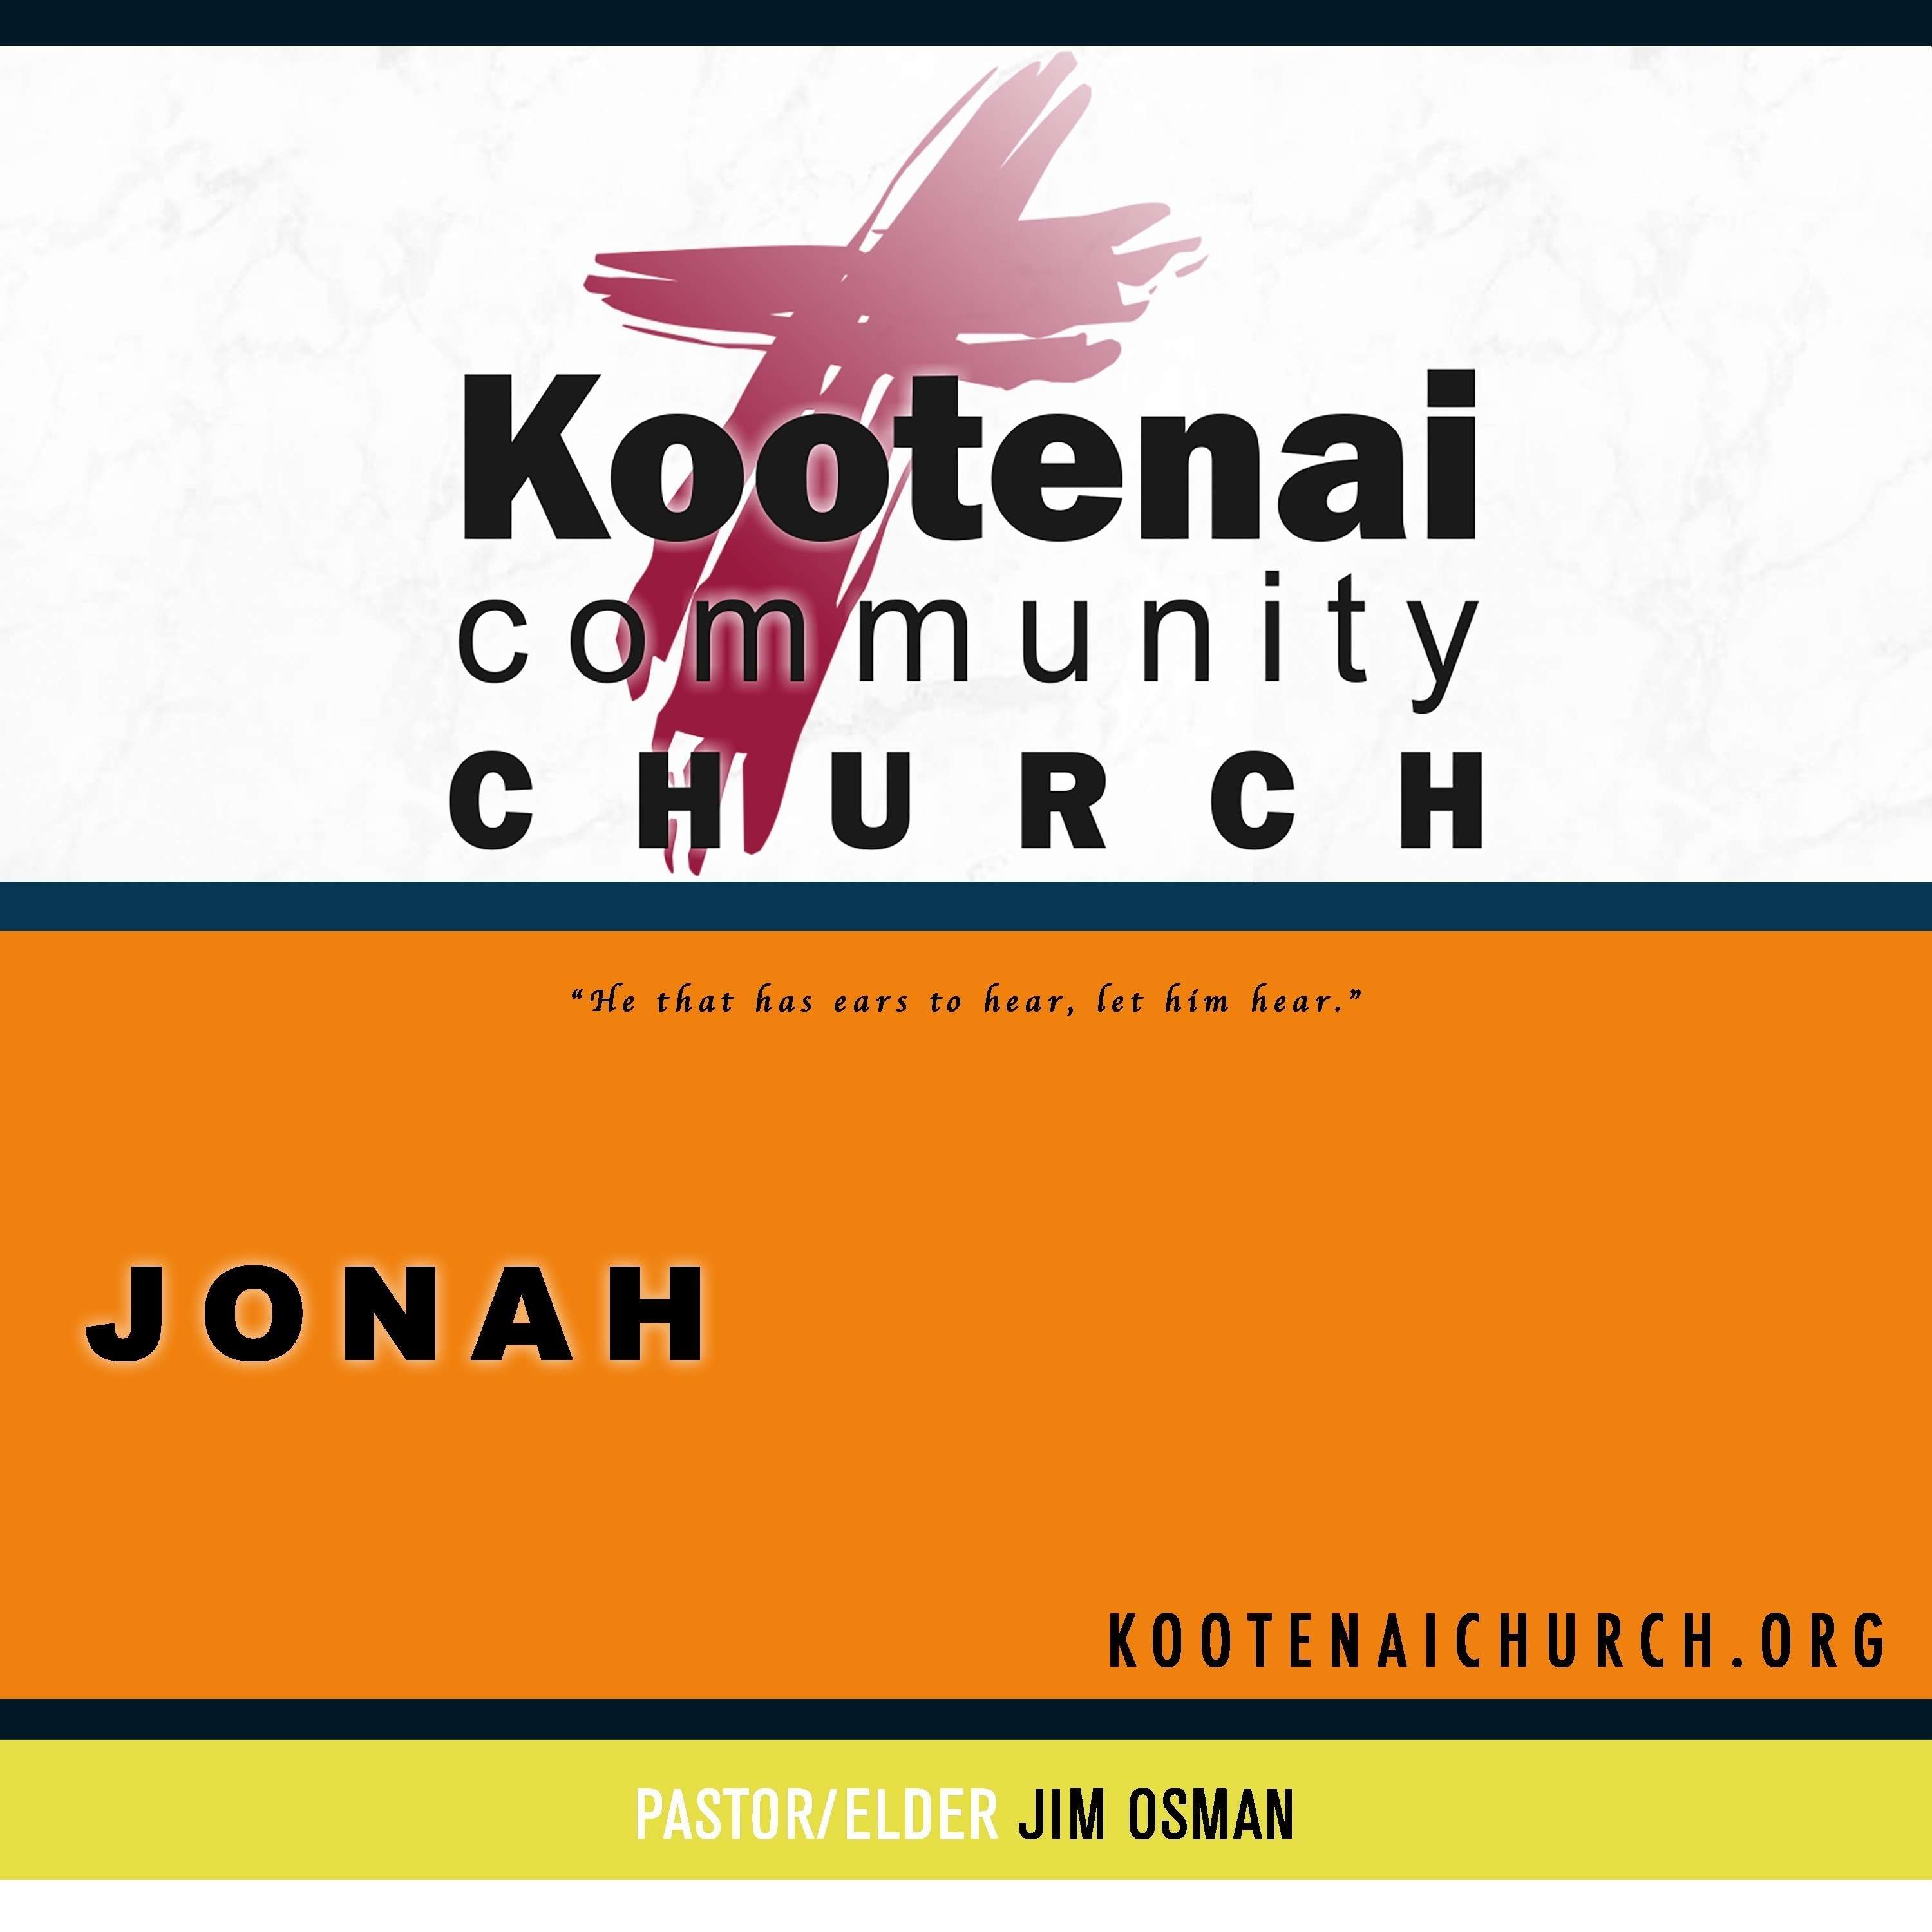 Introducing Jonah (Jonah 1:1; 2 Kings 14:25)